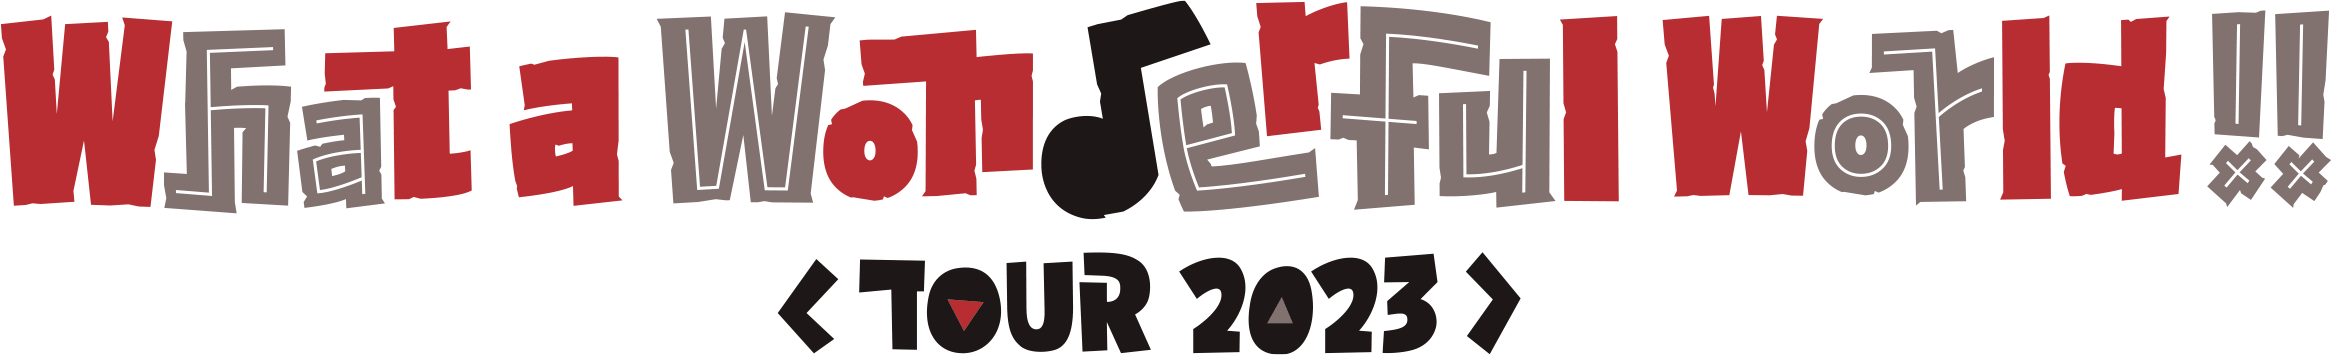 MONGOL800 25TH What a wonderful world TOUR 2023